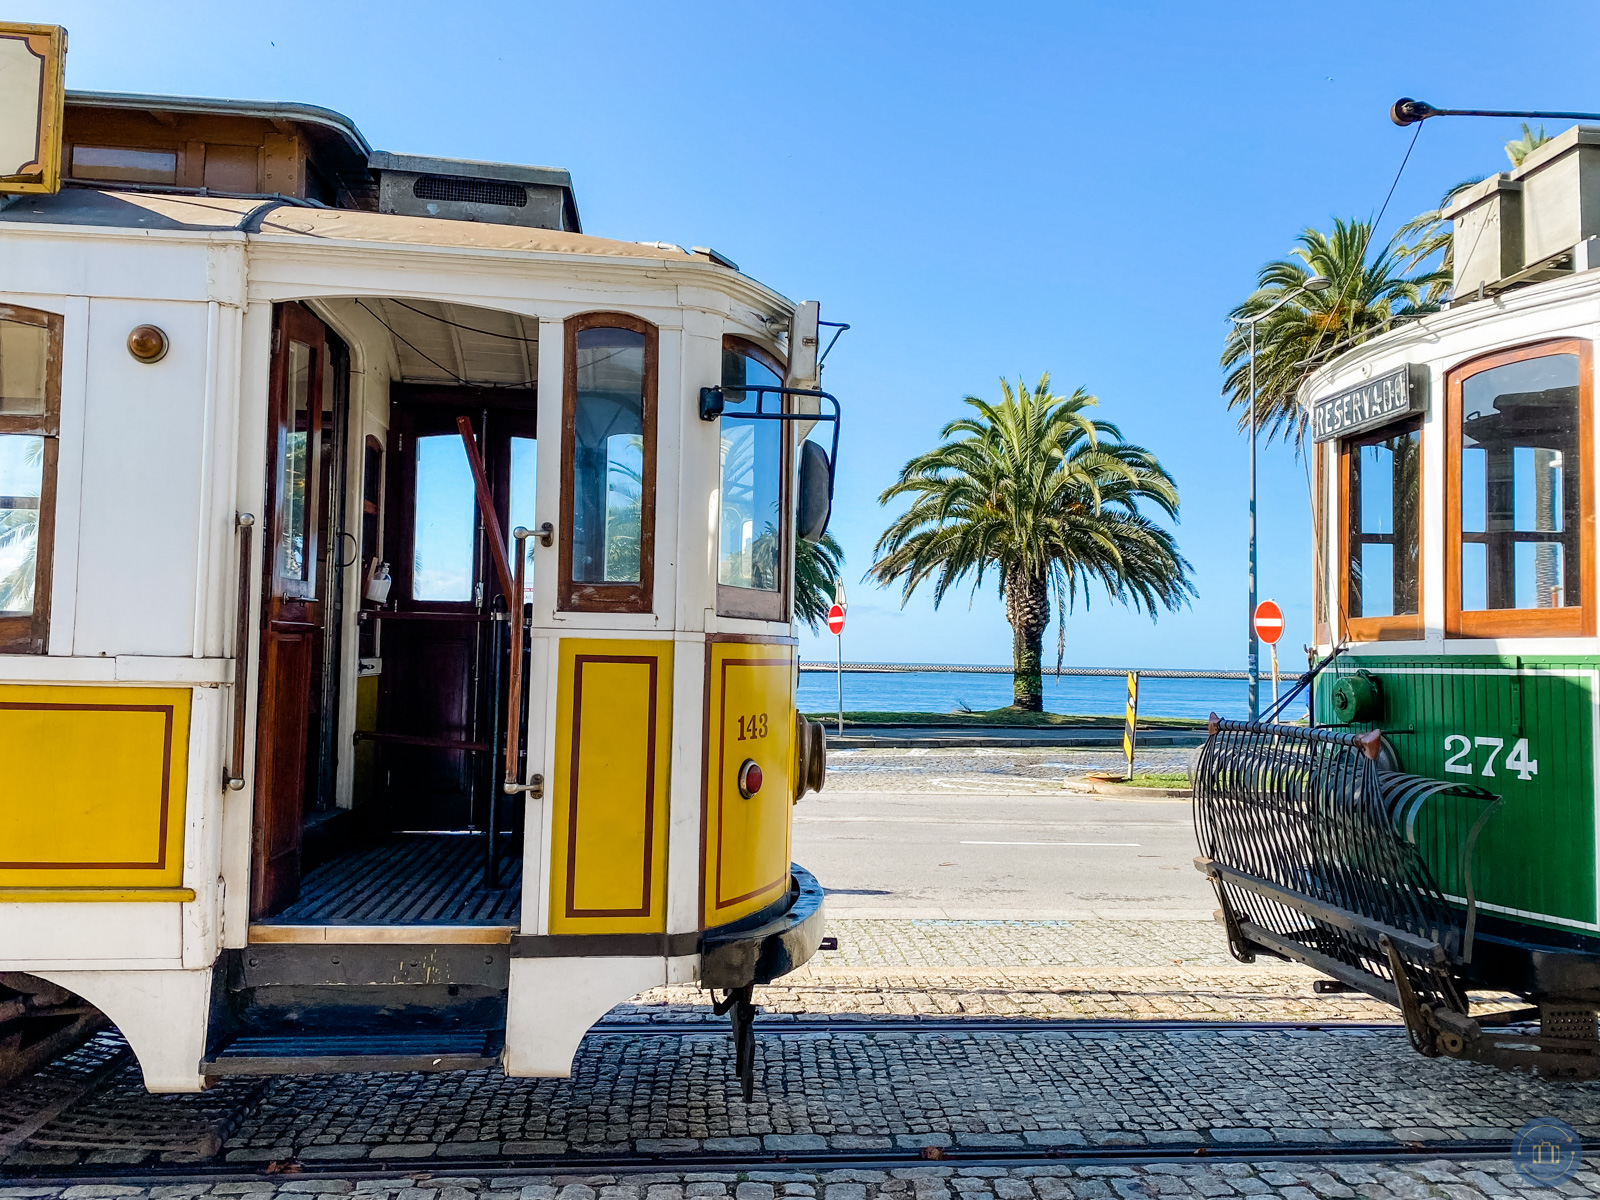 trams on street in porto portugal